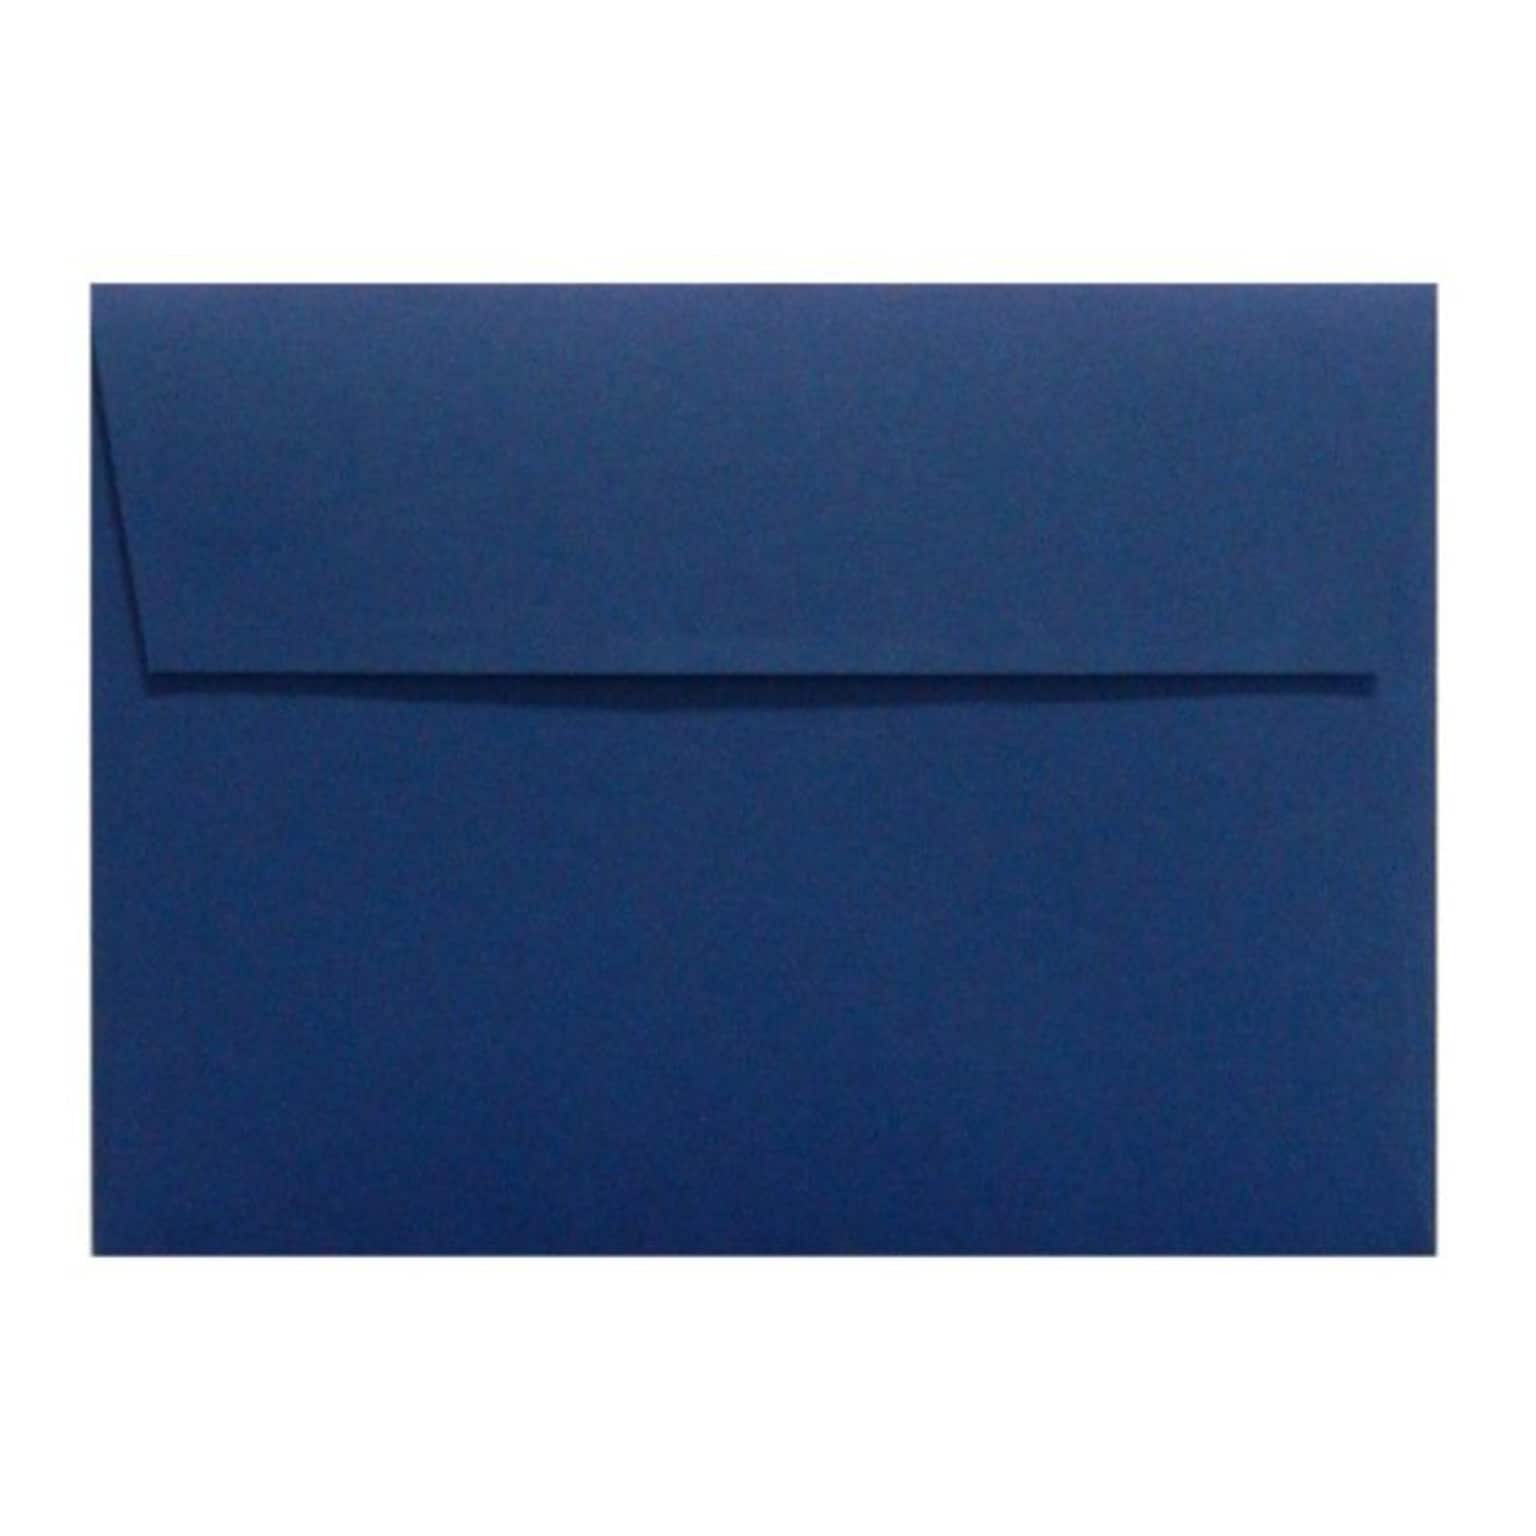 LUX A4 Invitation Envelopes (4 1/4 x 6 1/4) 50/Box, Navy (LUX-4872-103-50)